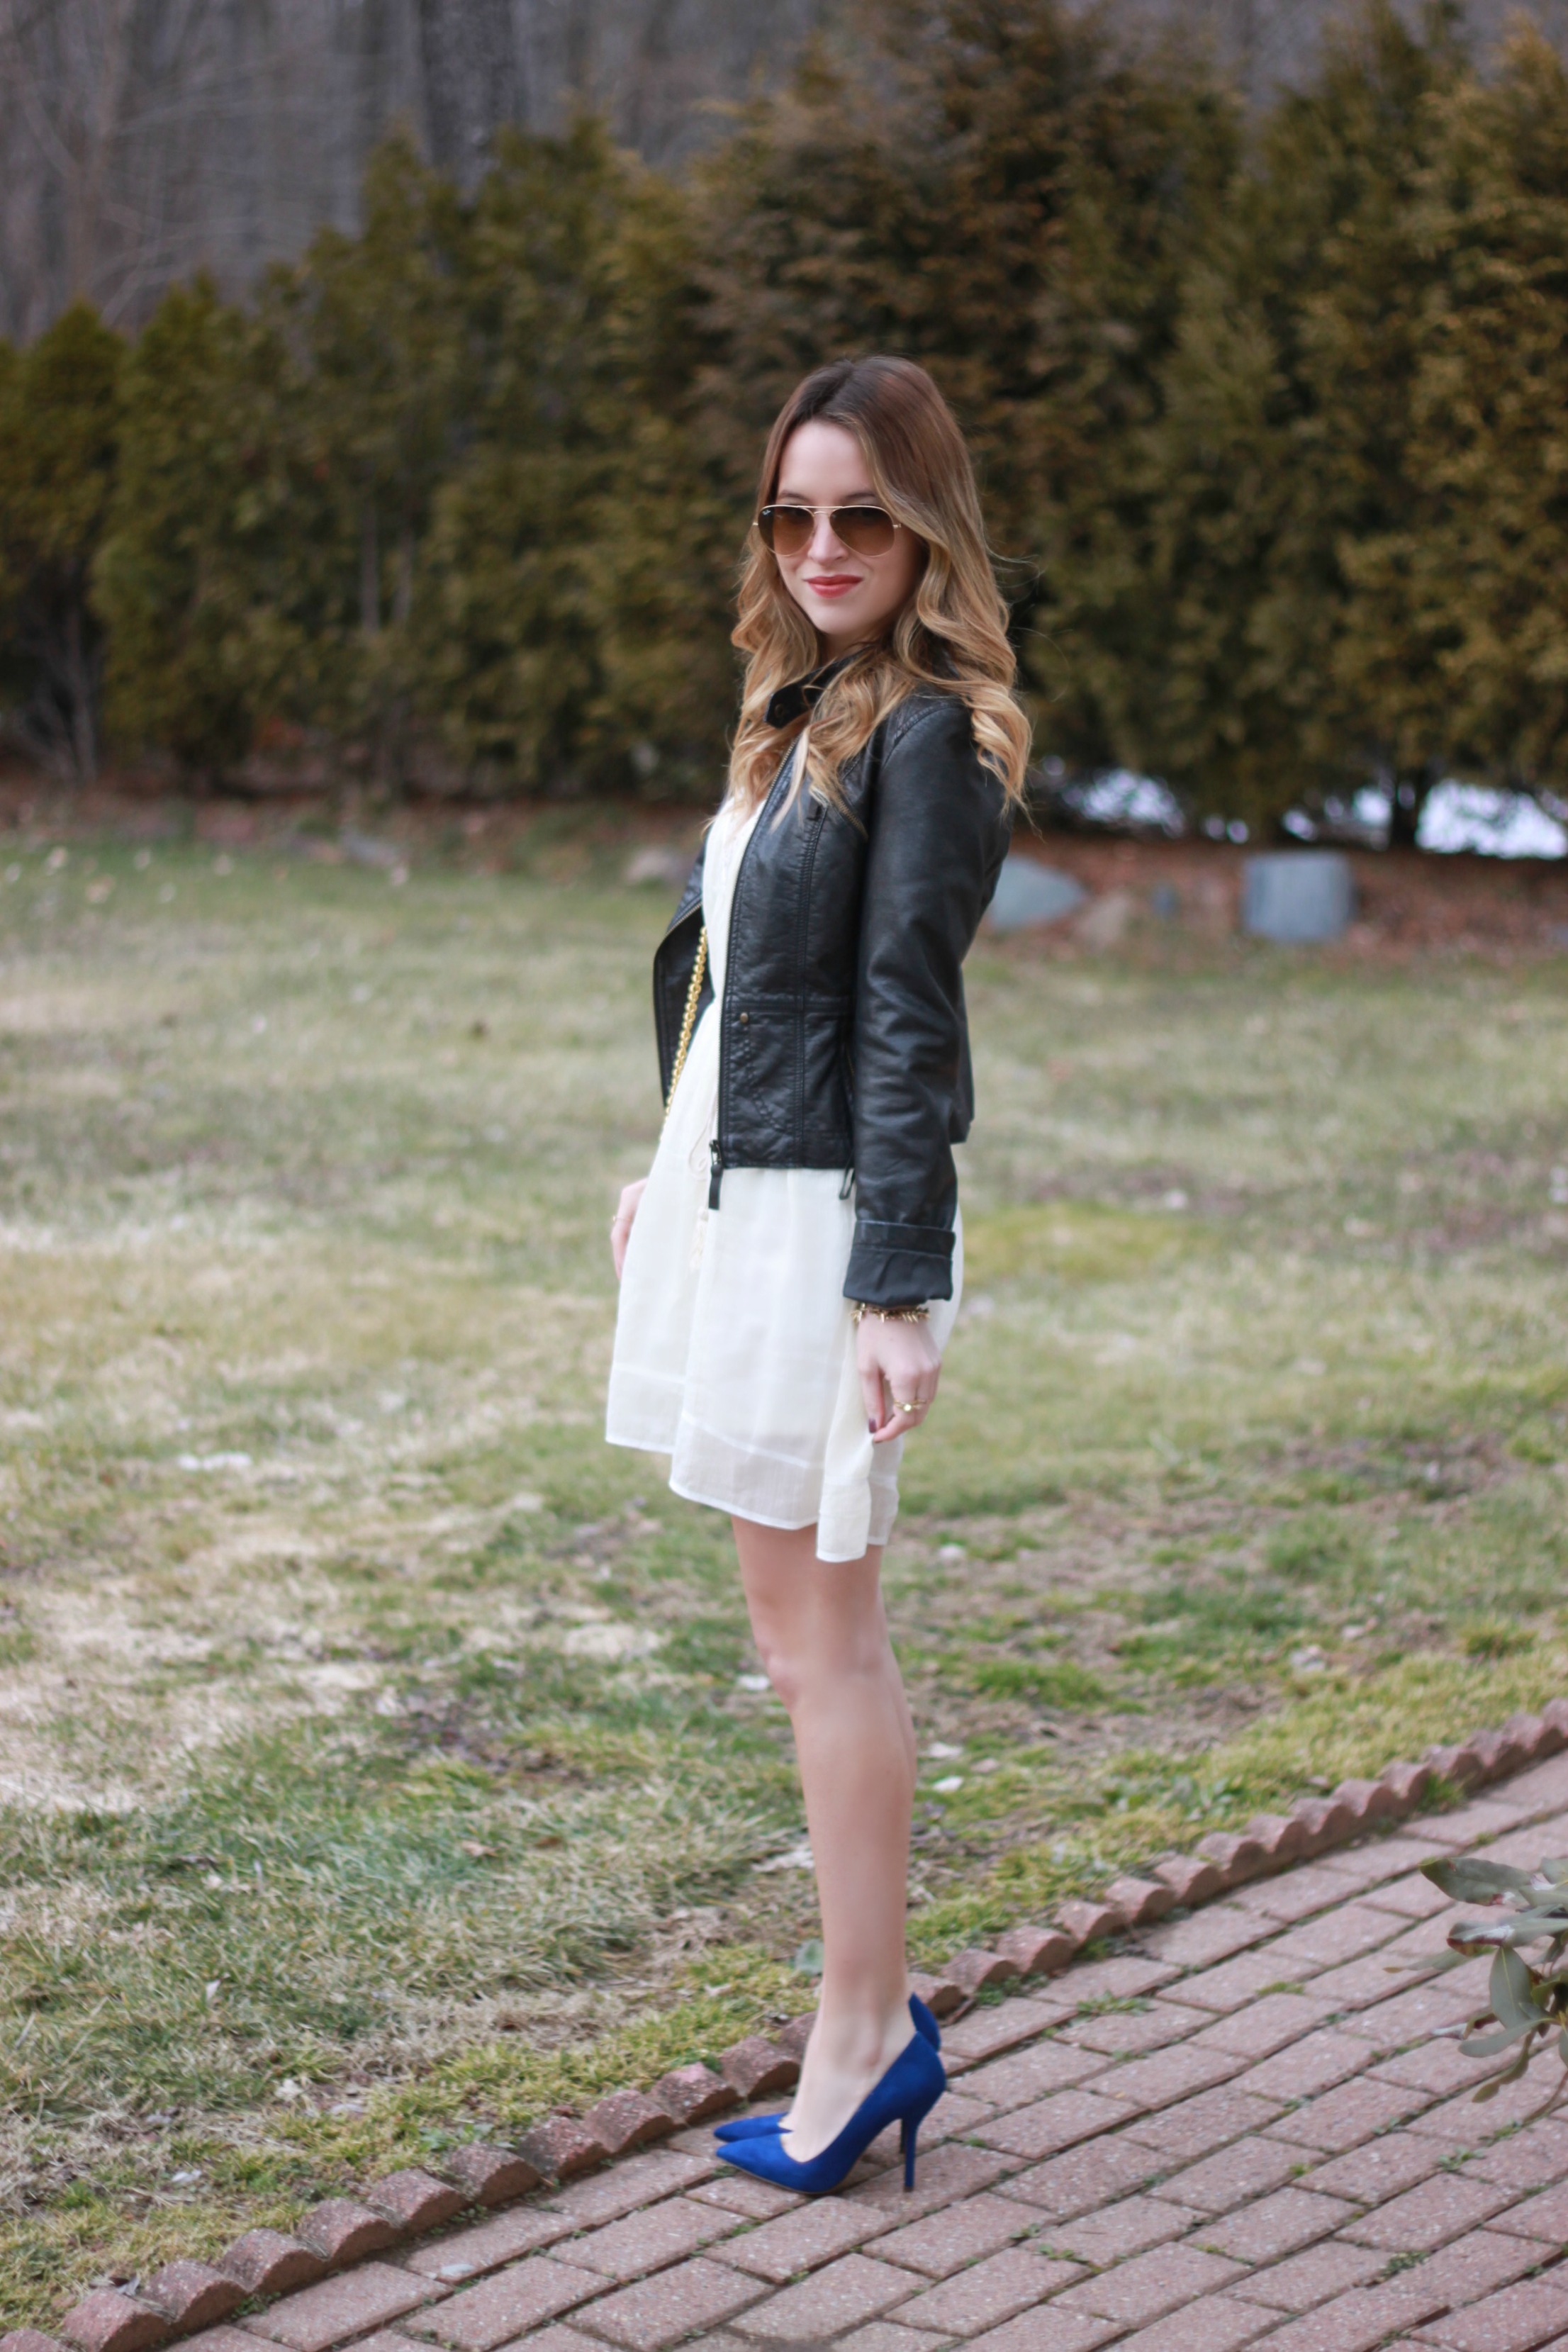 Leather Jacket / Lace Dress